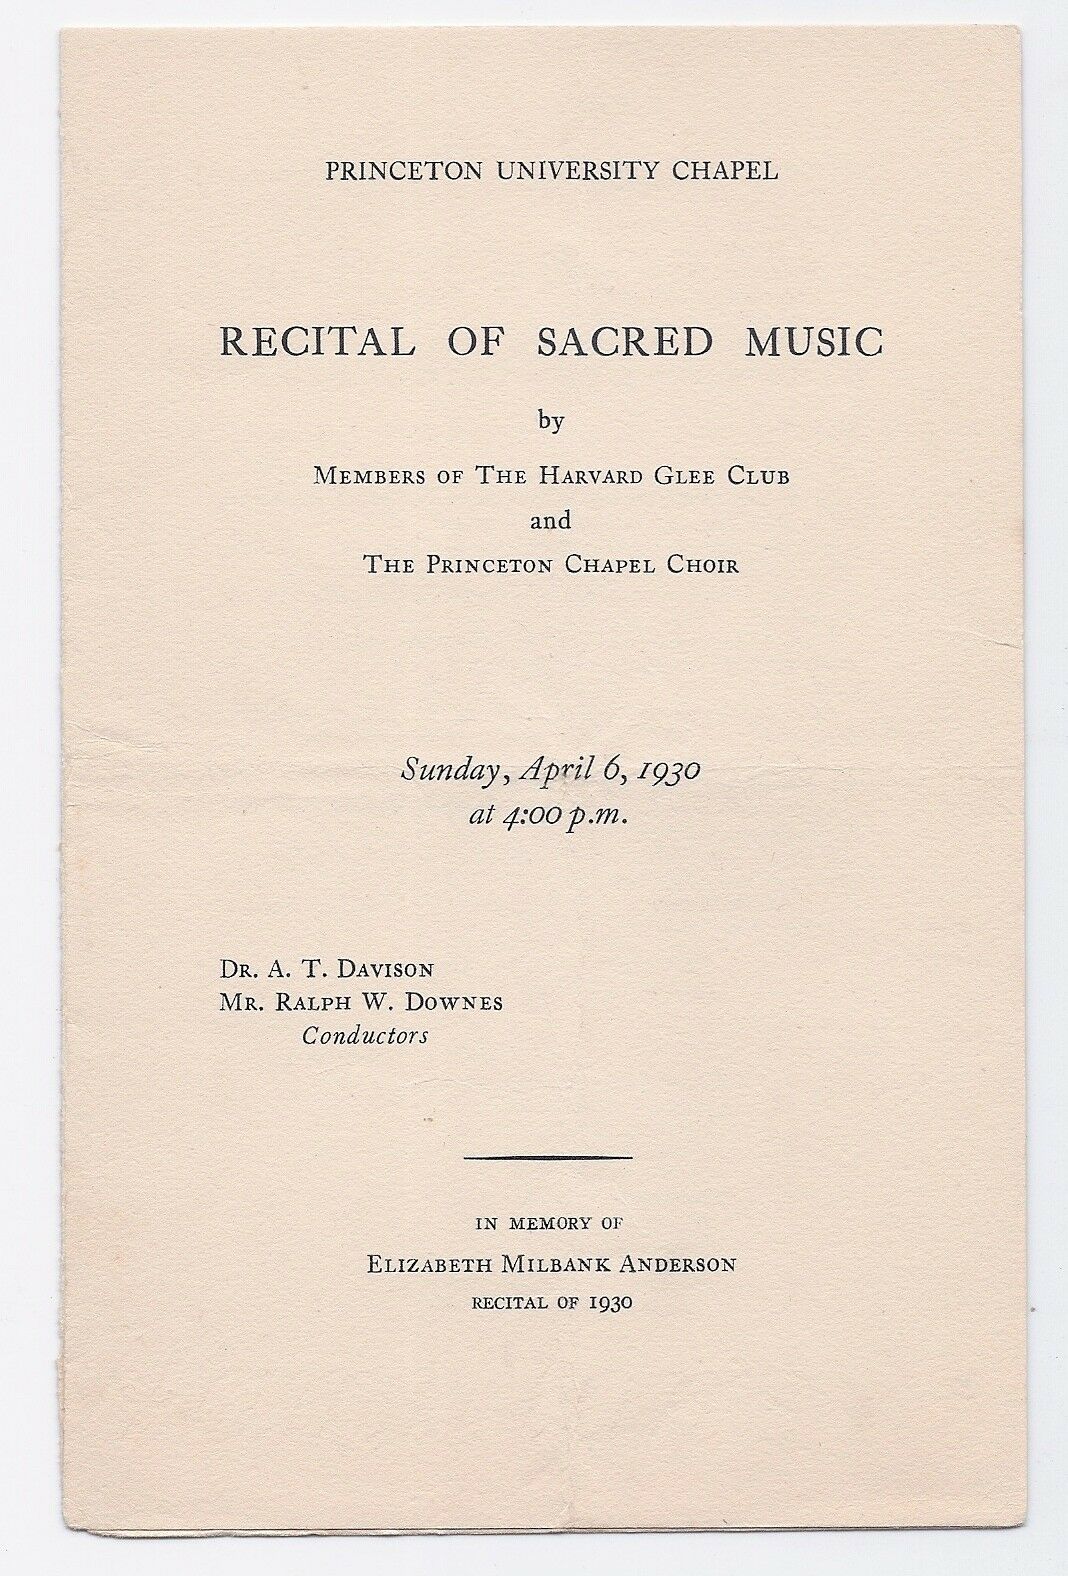 Recital of Sacred Music Program, Harvard Glee Club & Princeton Chapel Choir 1930